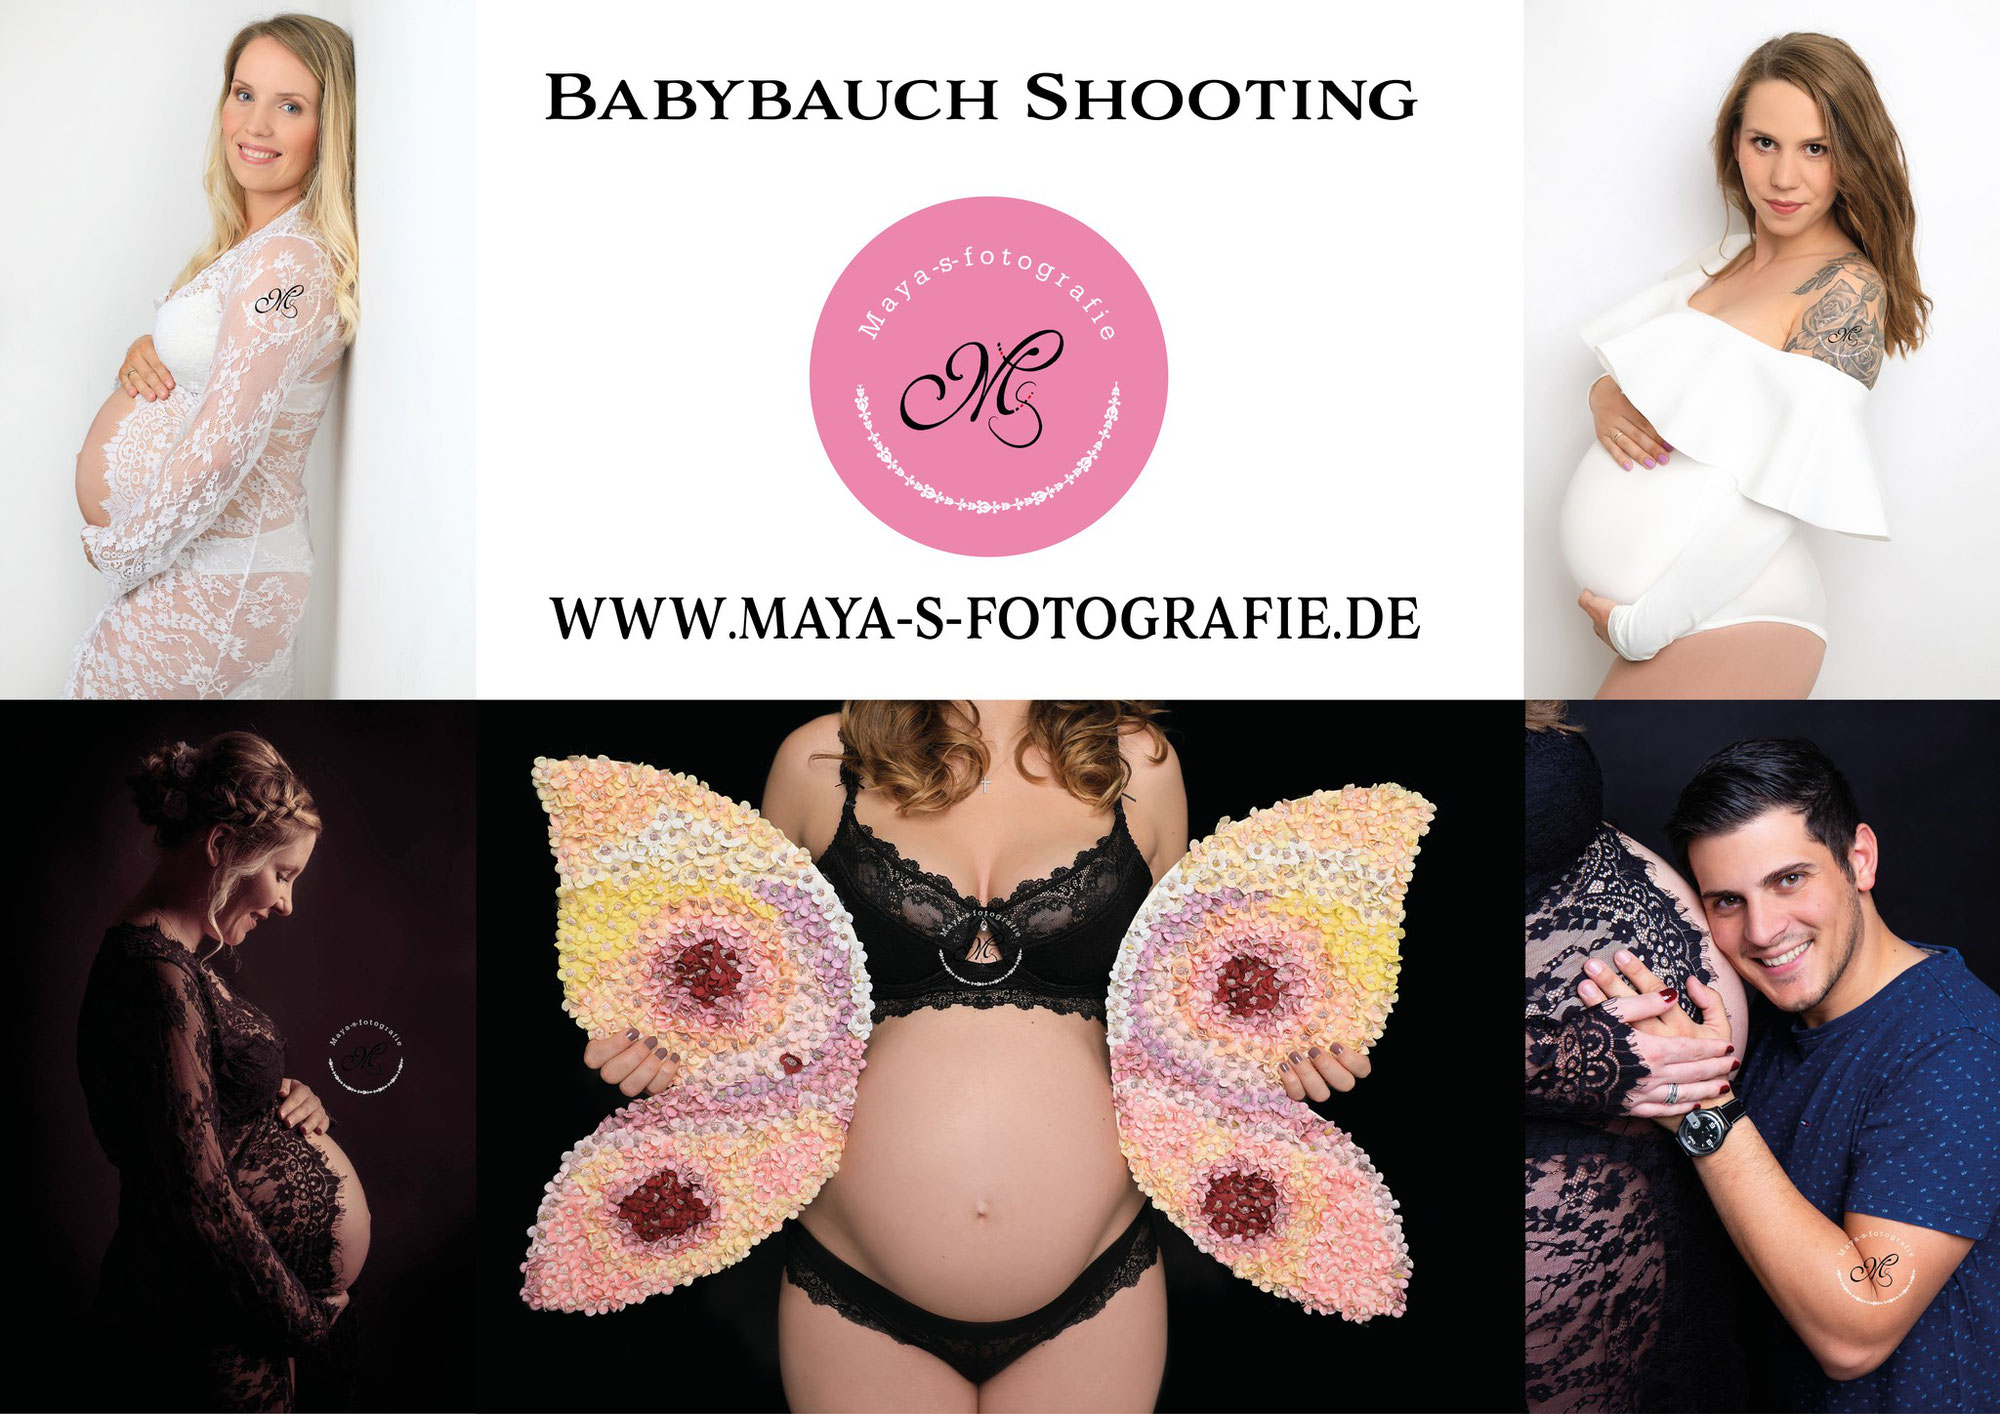 Babybauch Shooting-Schwangerschaftsshooting bei Maya-S-Fotografie